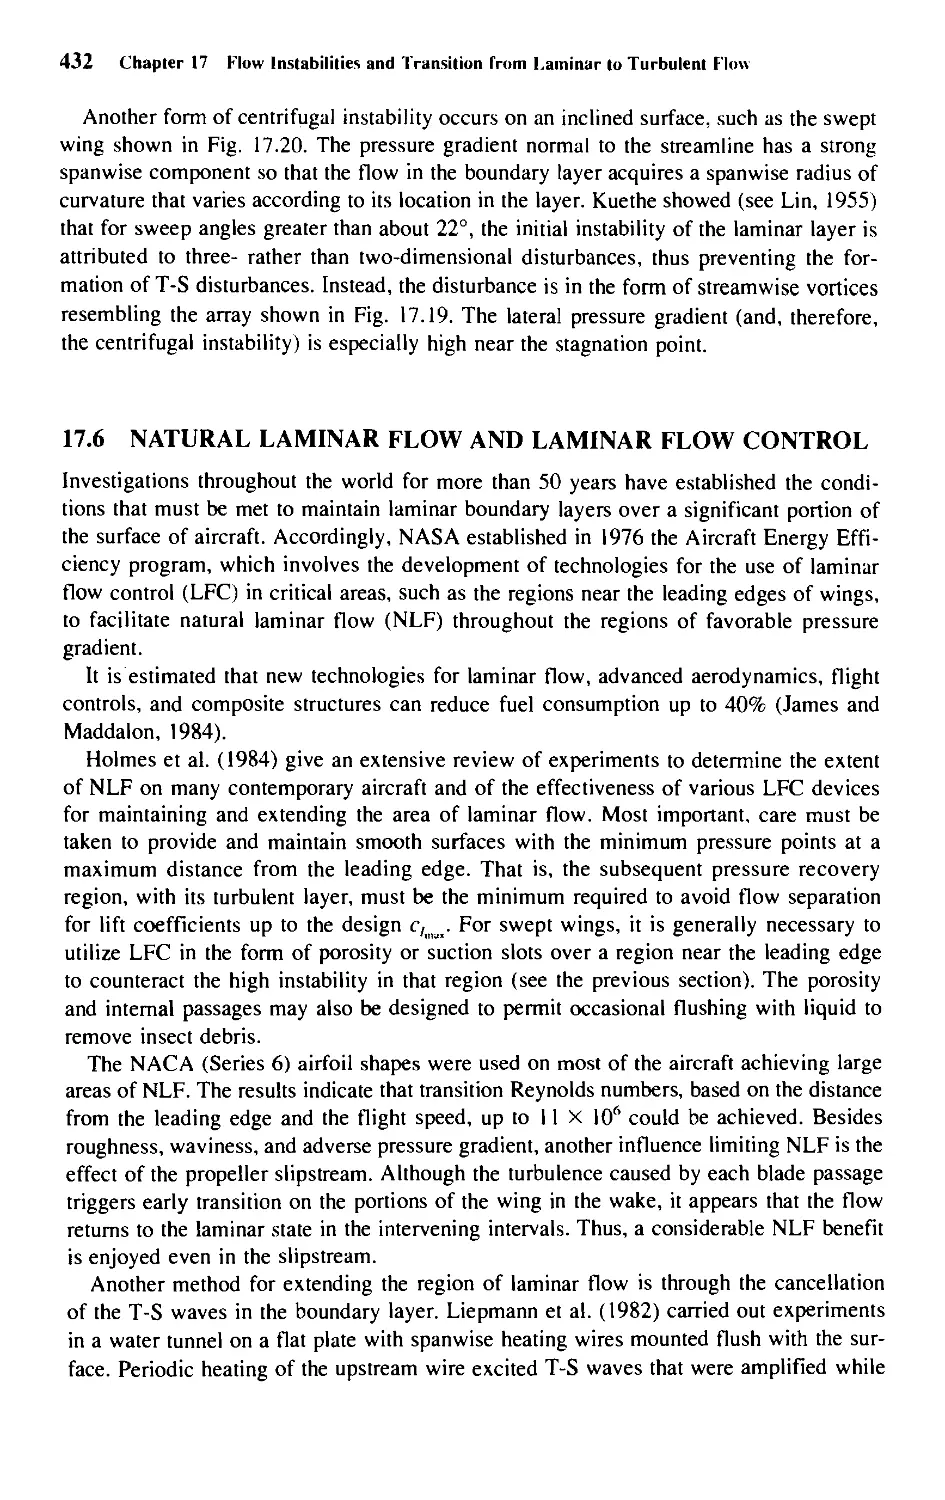 17.6 - Natural Laminar Flow and Laminar Flow Control